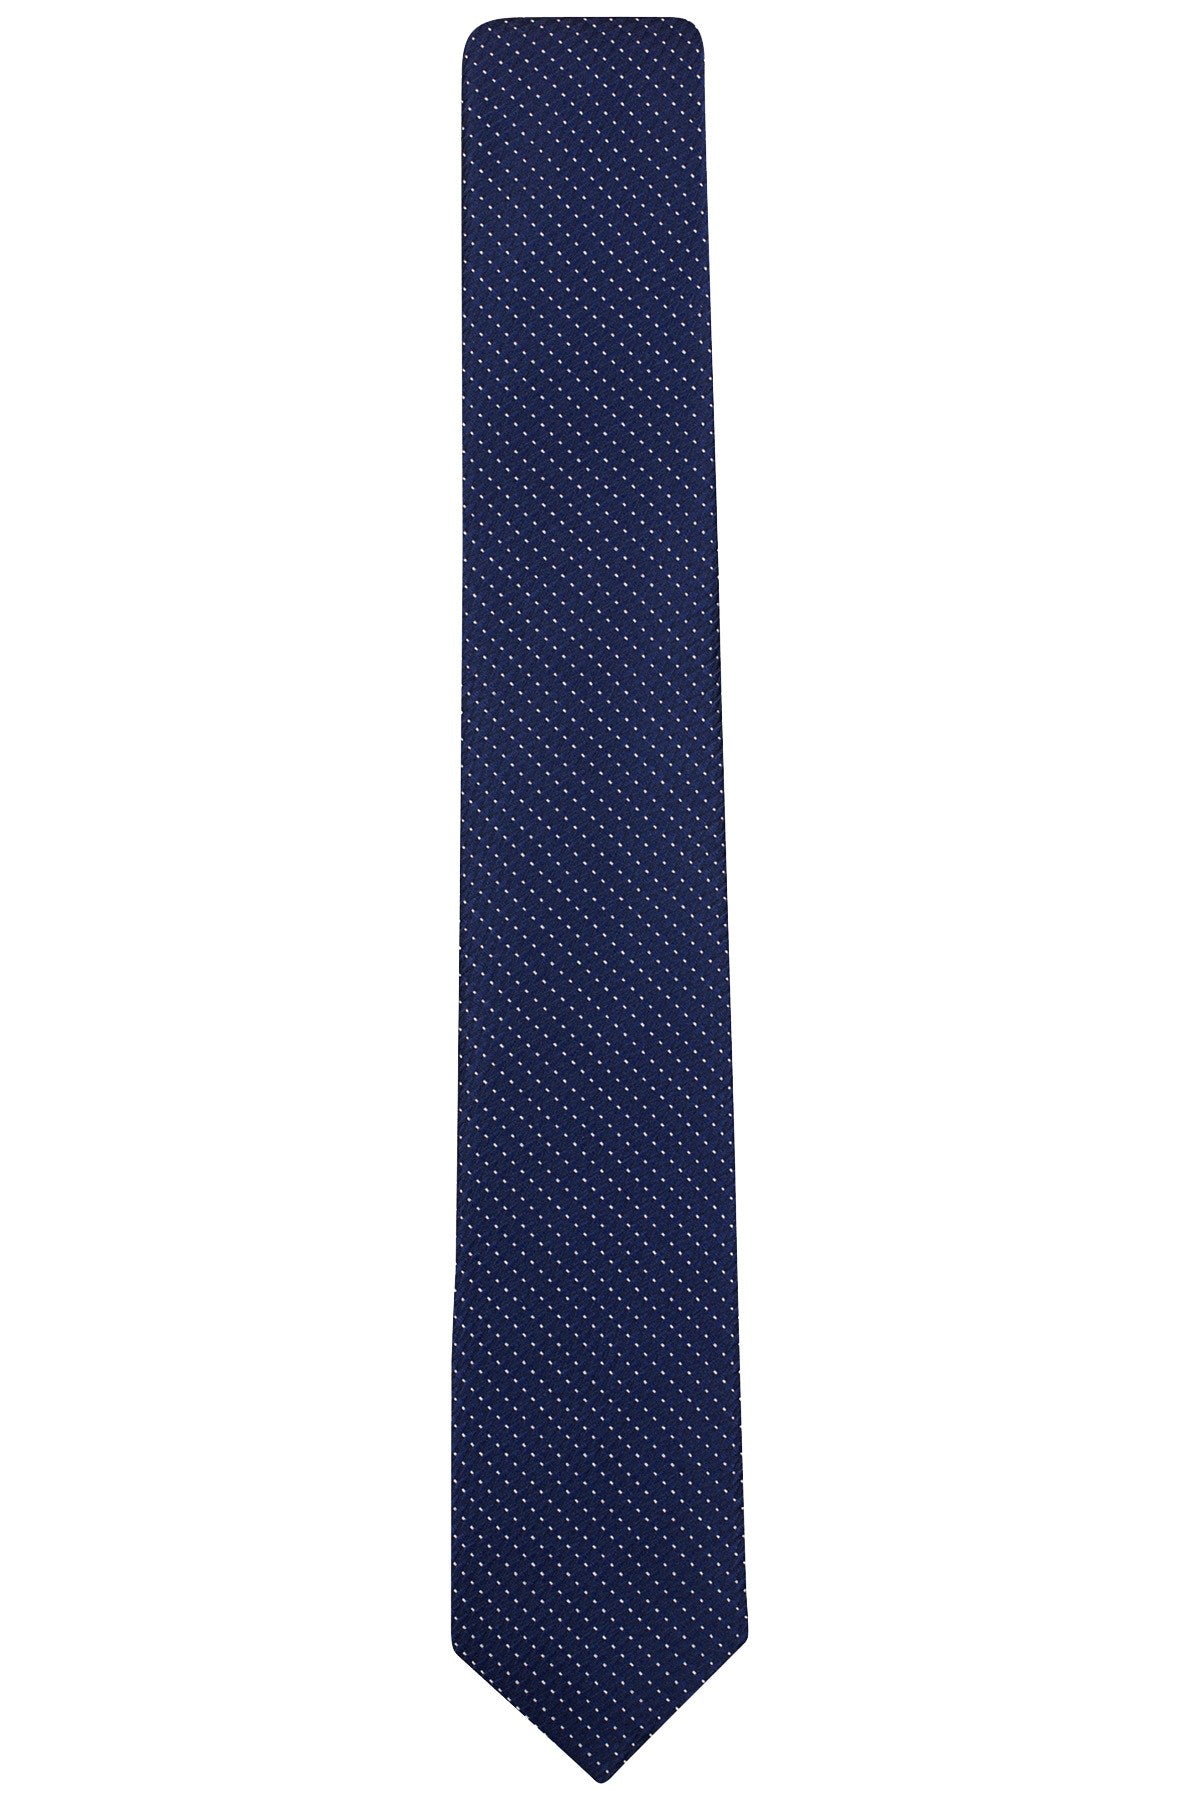 BAR III Navy Pindot Moorhouse Skinny Tie